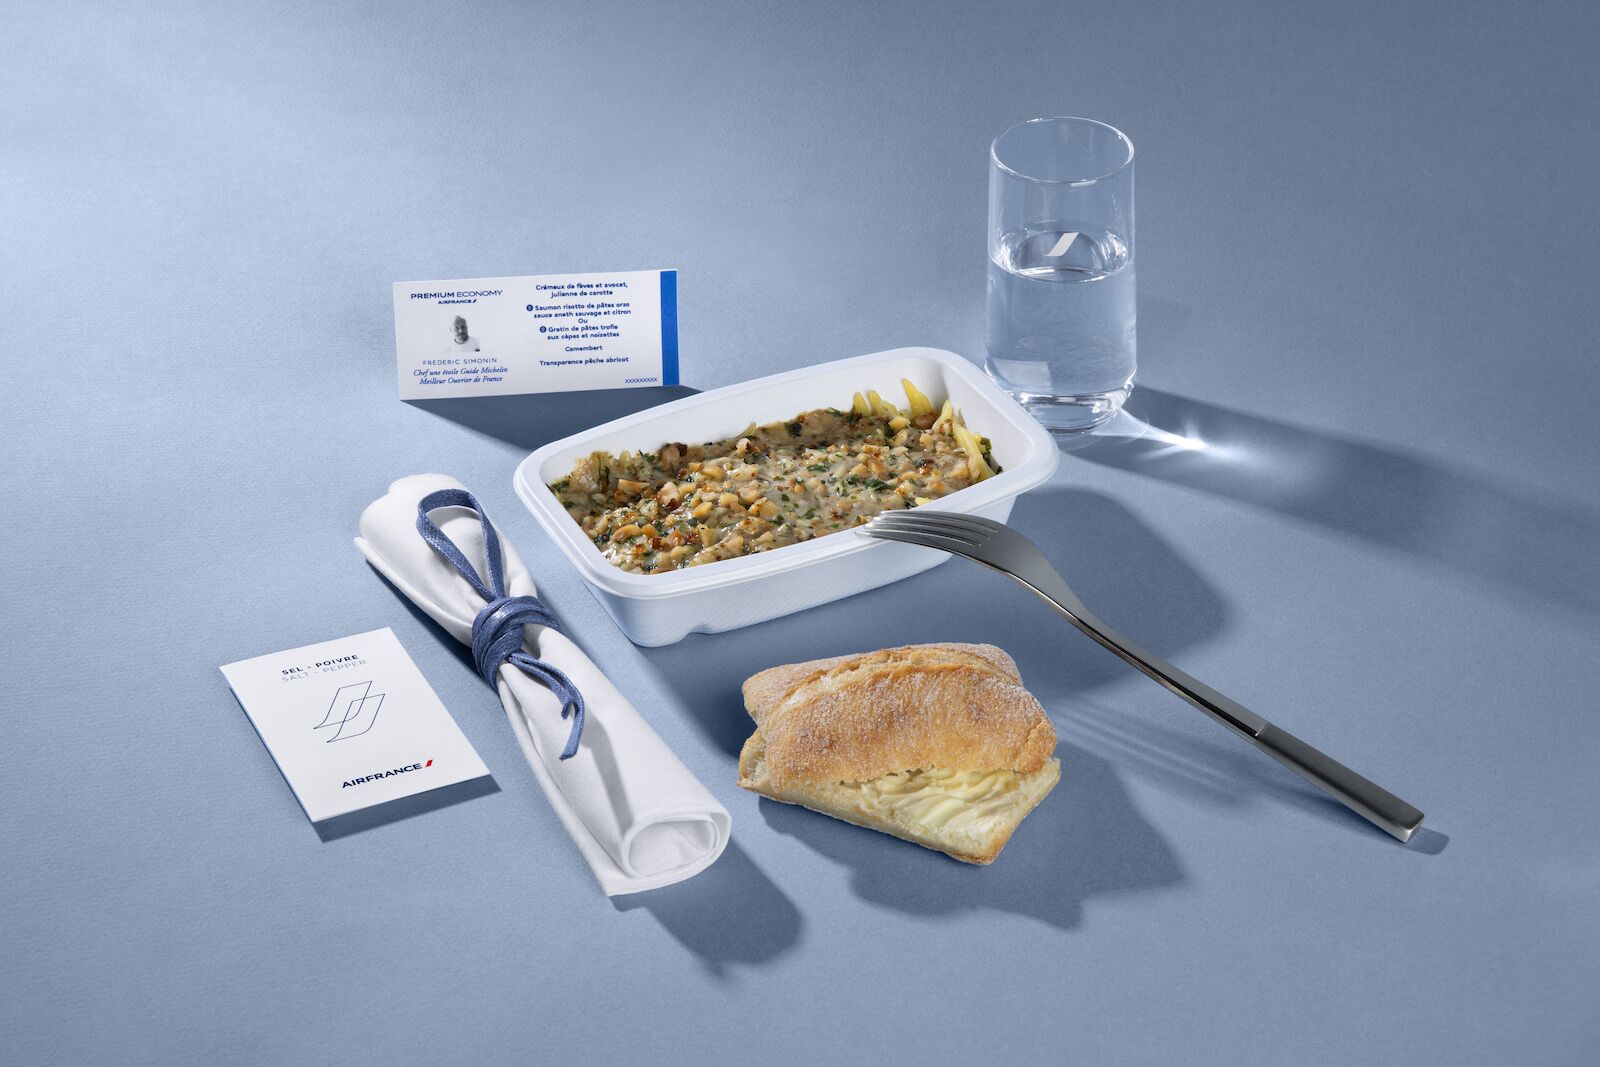 Air France menu designed by Frederic Simonin, a Michelin star chef